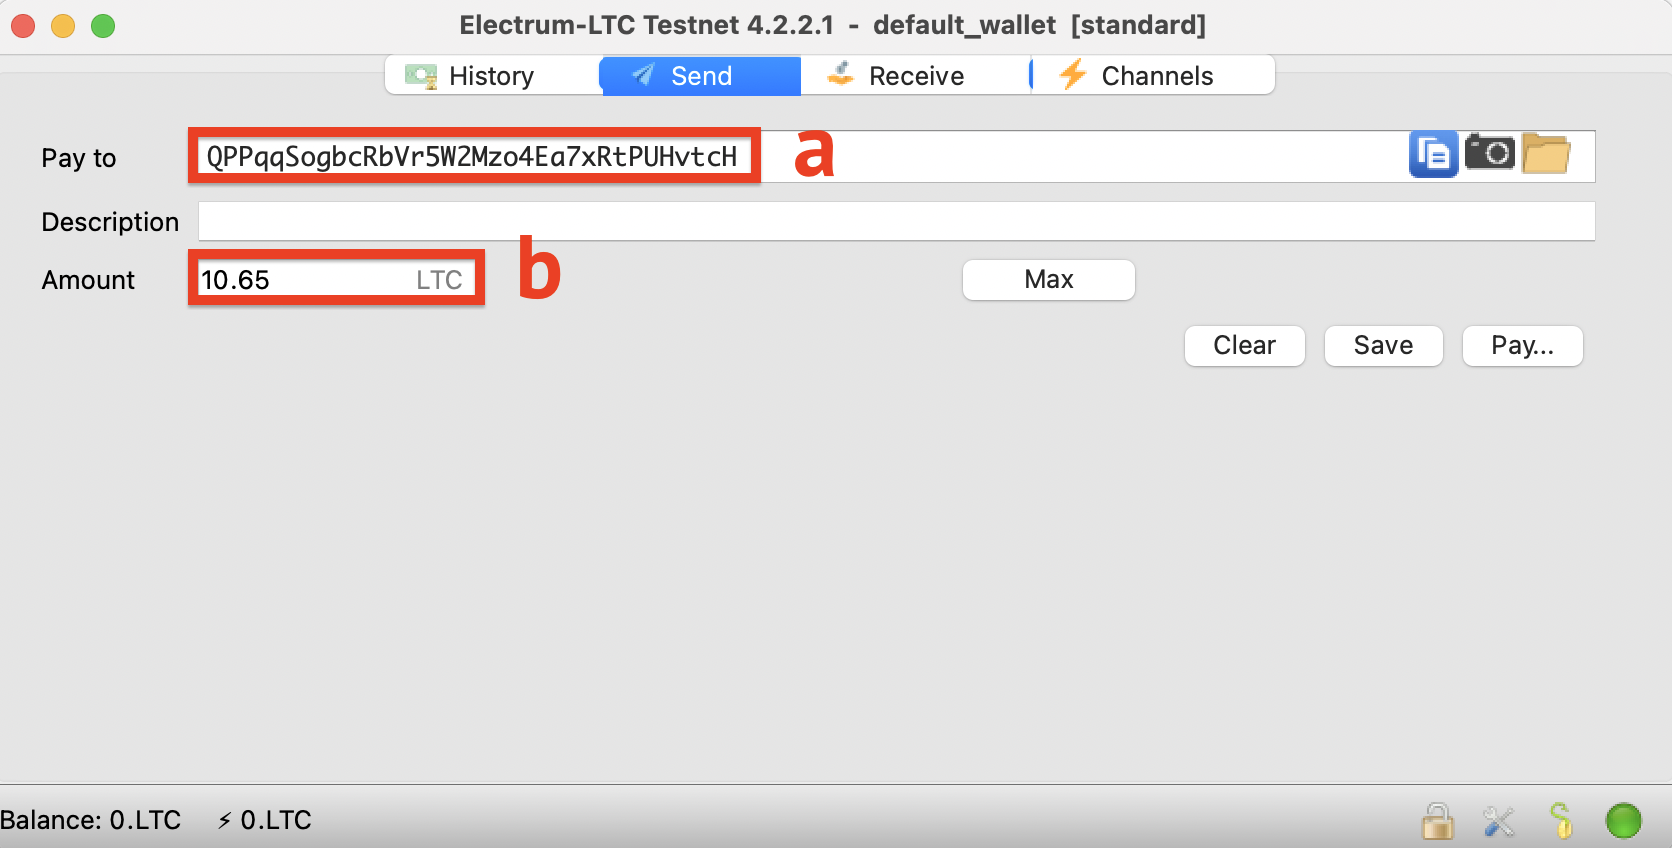 litecoin-testnet-box/1/coinmag.fun at master · dasher/litecoin-testnet-box · GitHub